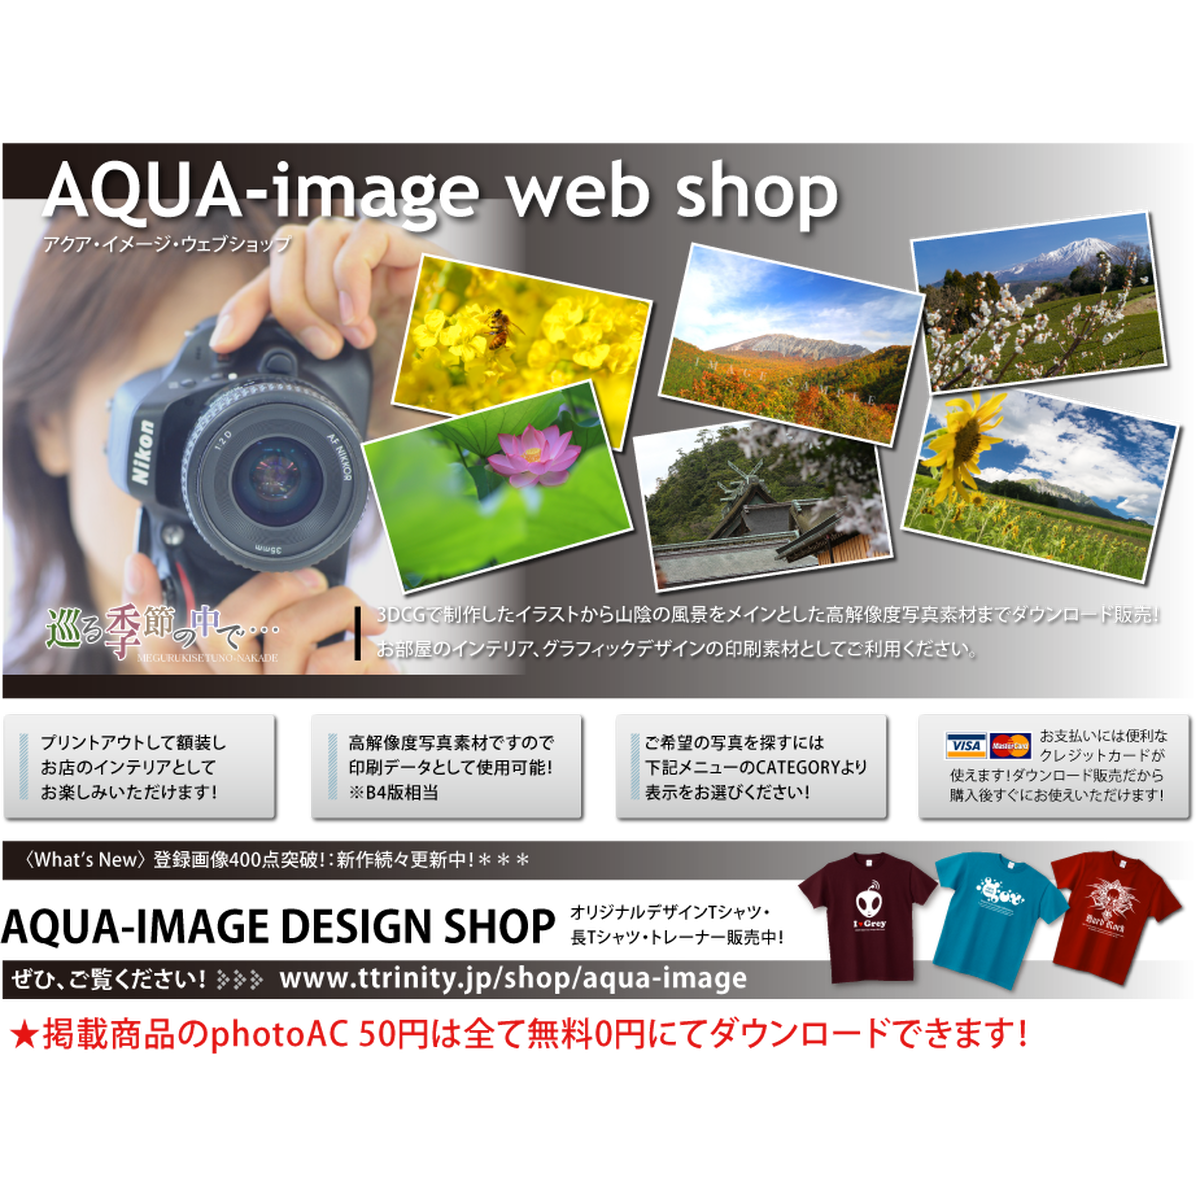 3dcgイラスト Aqua Image Web Shop 高解像度ロイヤリティーフリー写真素材ダウンロードサイト